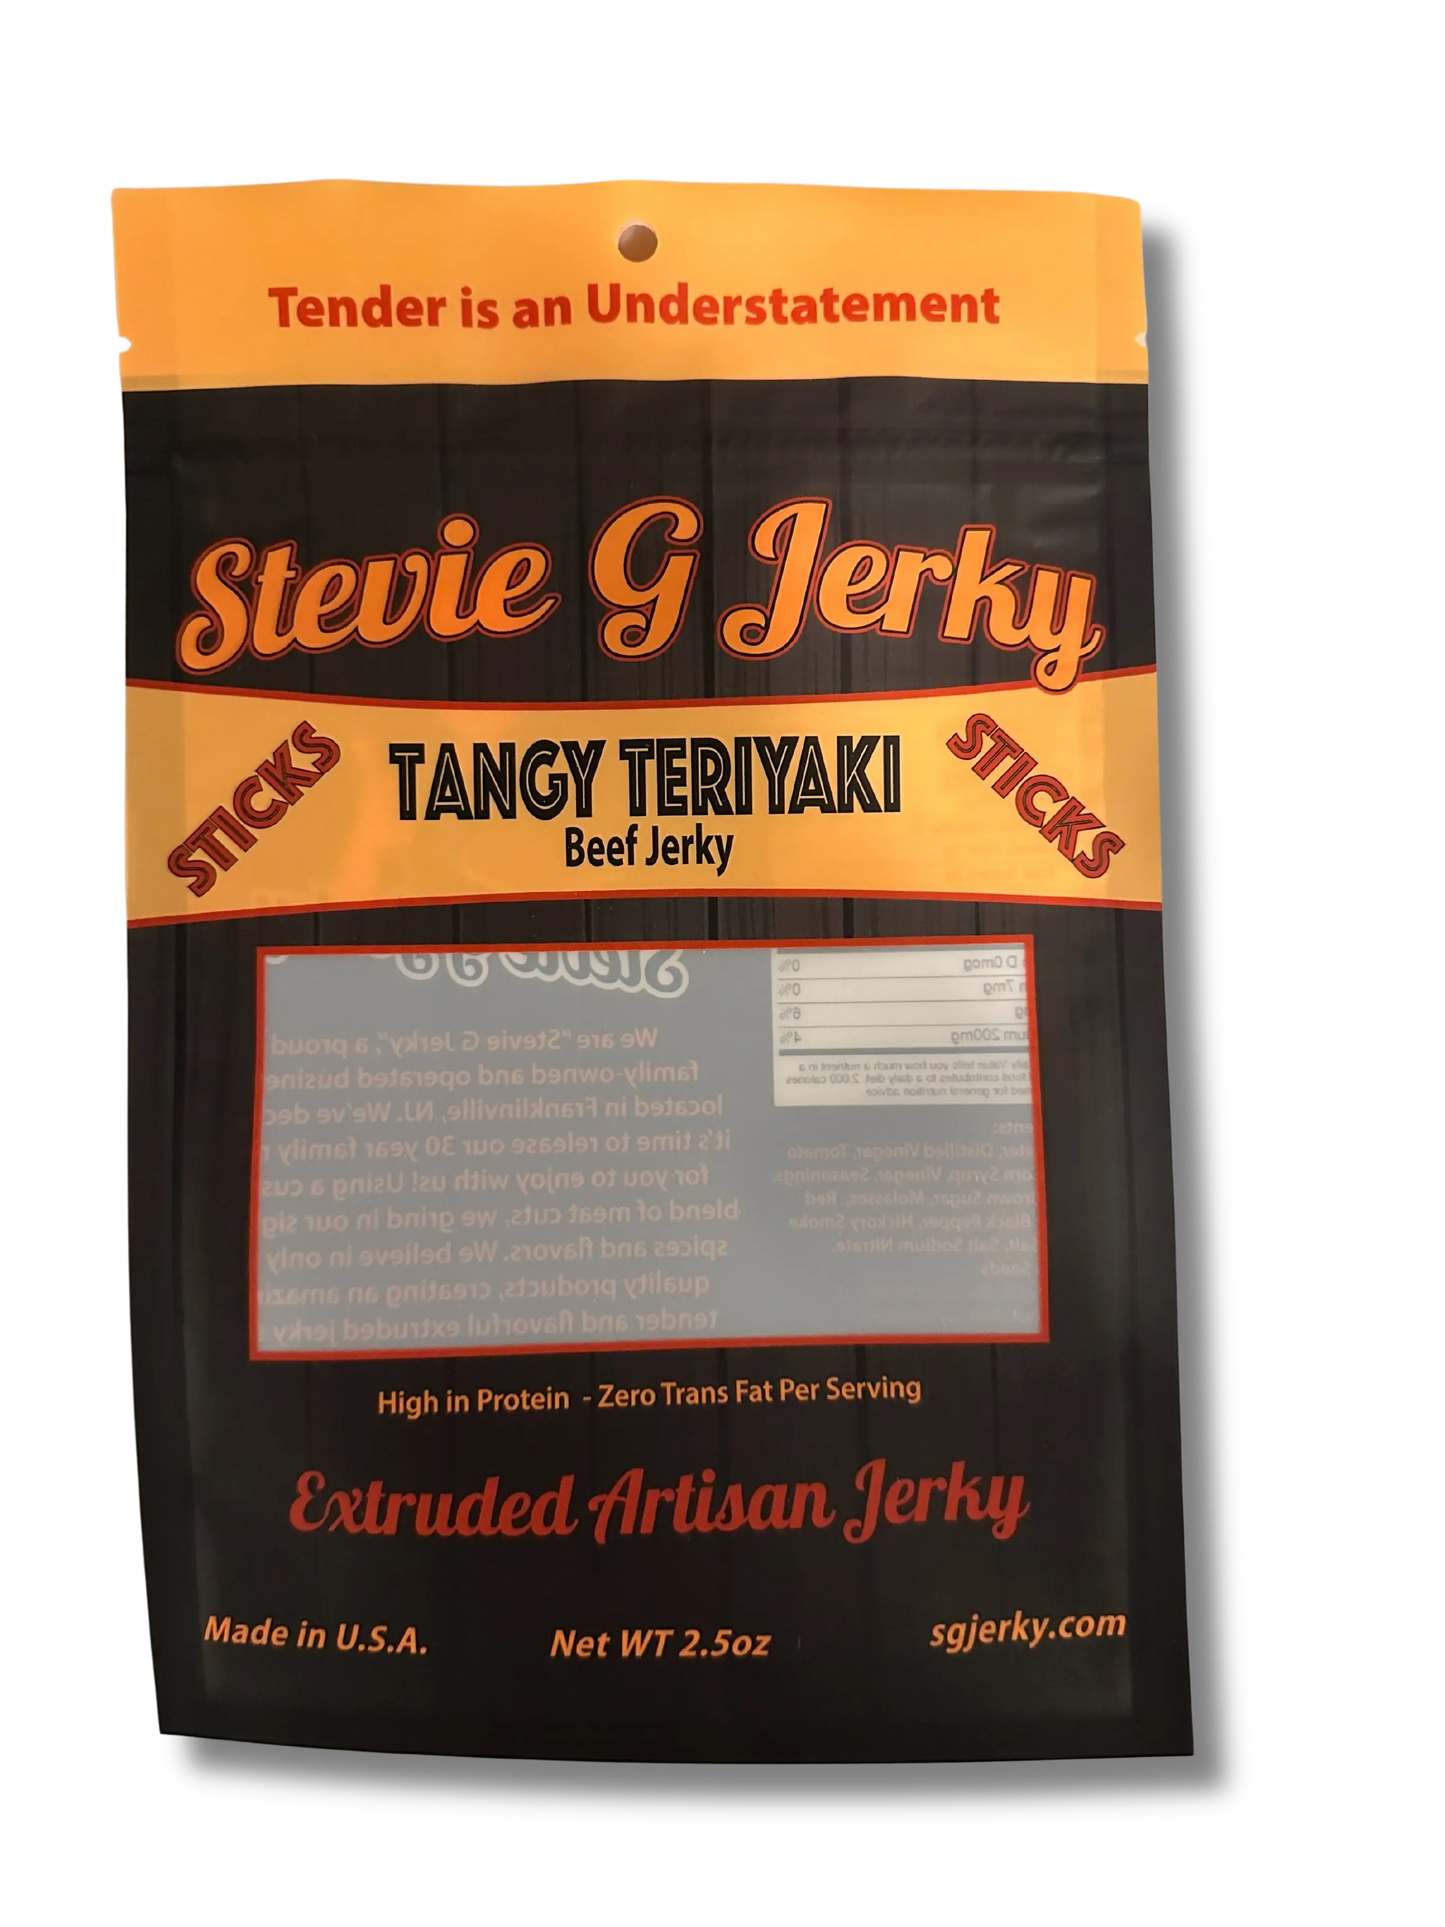 Steve G's Tangy Teriyaki Beef Jerky Bundle in focus